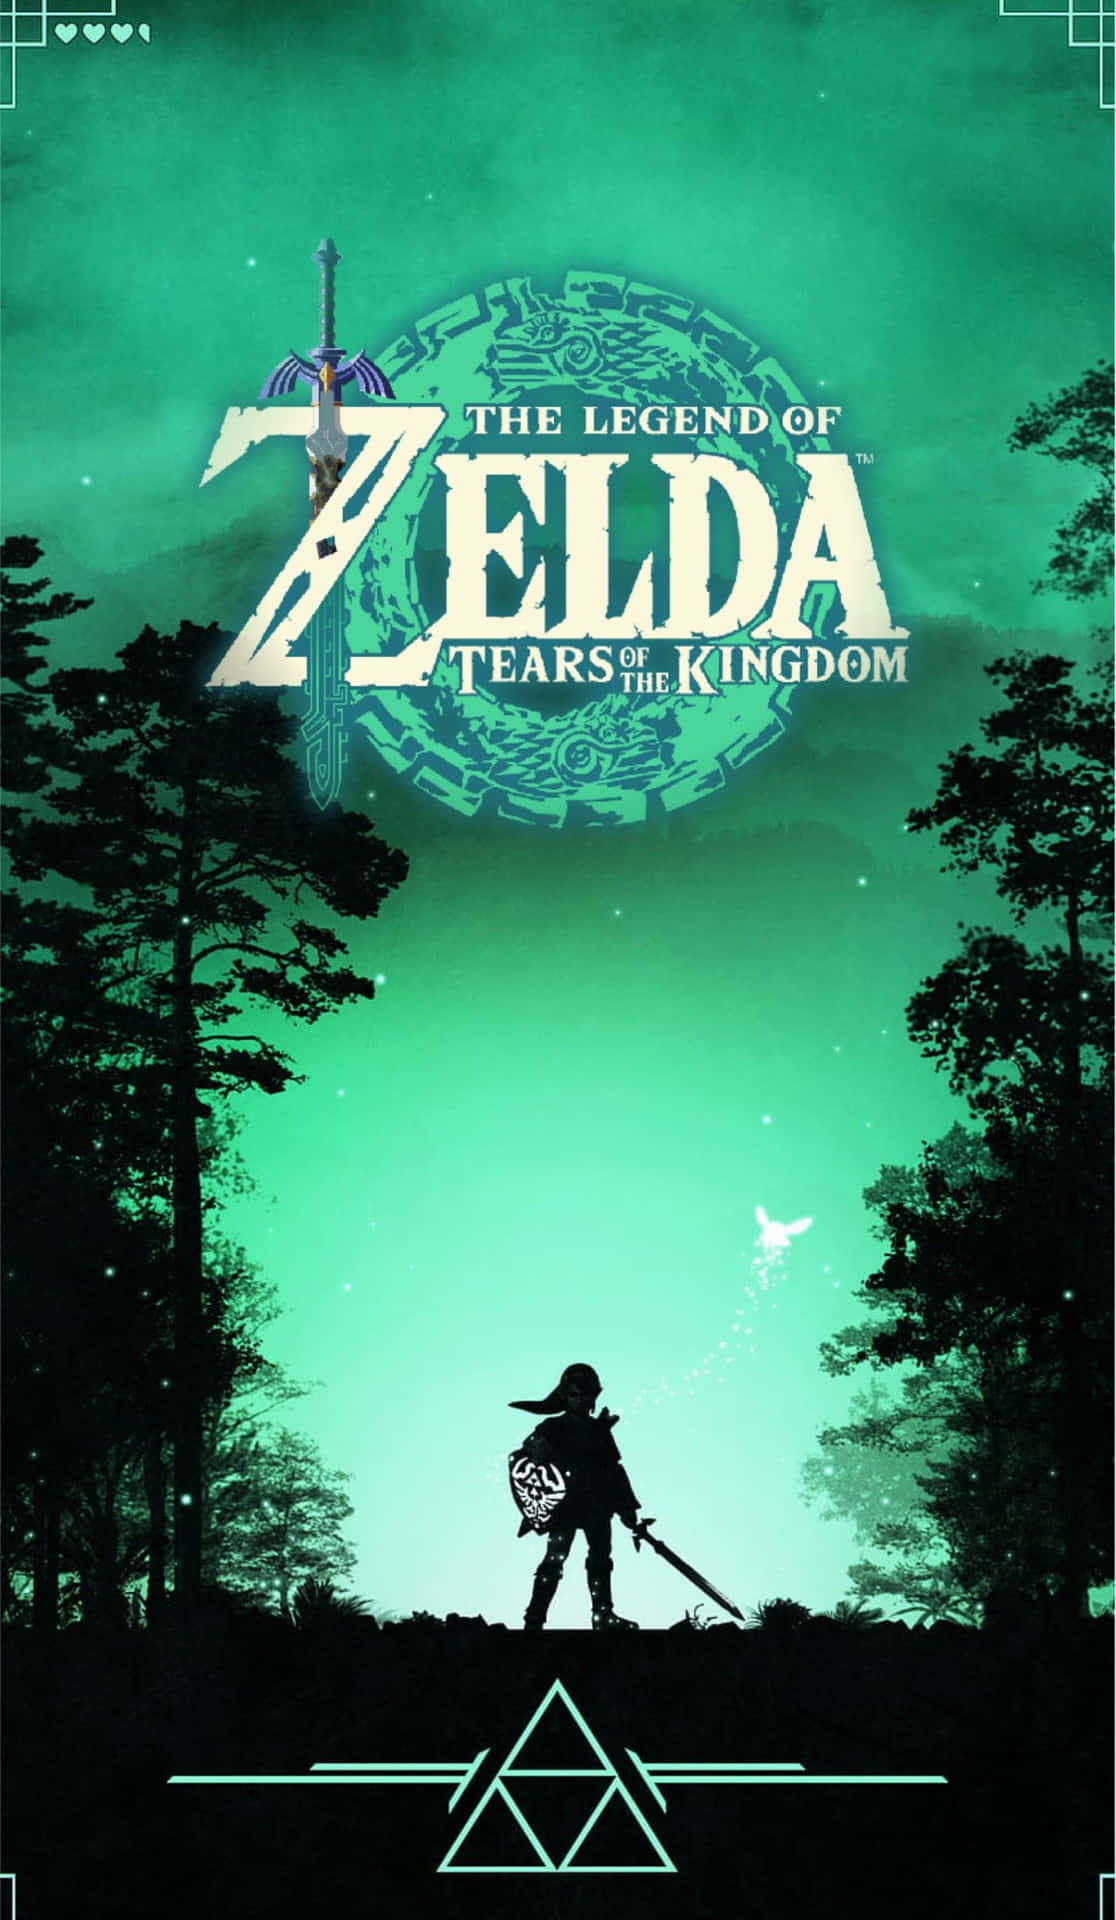 Legendof Zelda Tearsofthe Kingdom Poster Wallpaper